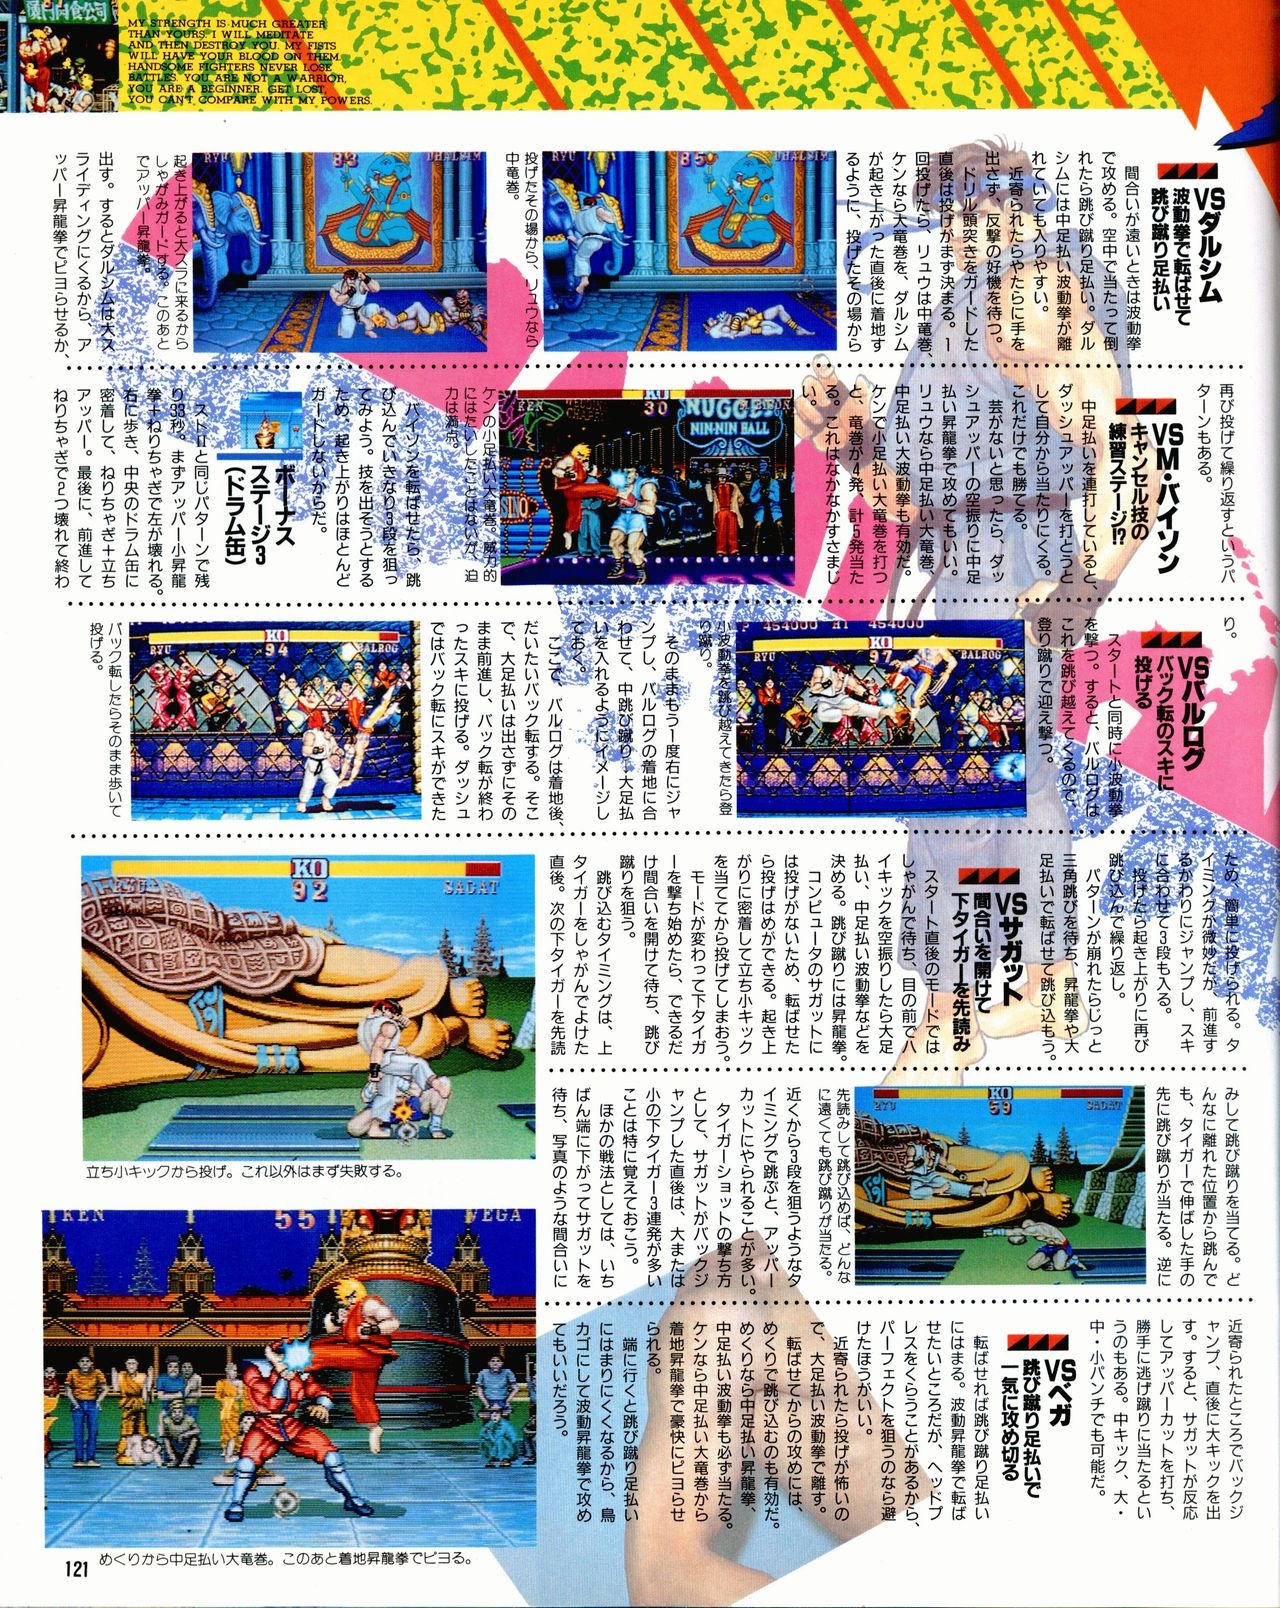 Street Fighter II Dash - Gamest special issue 77 122